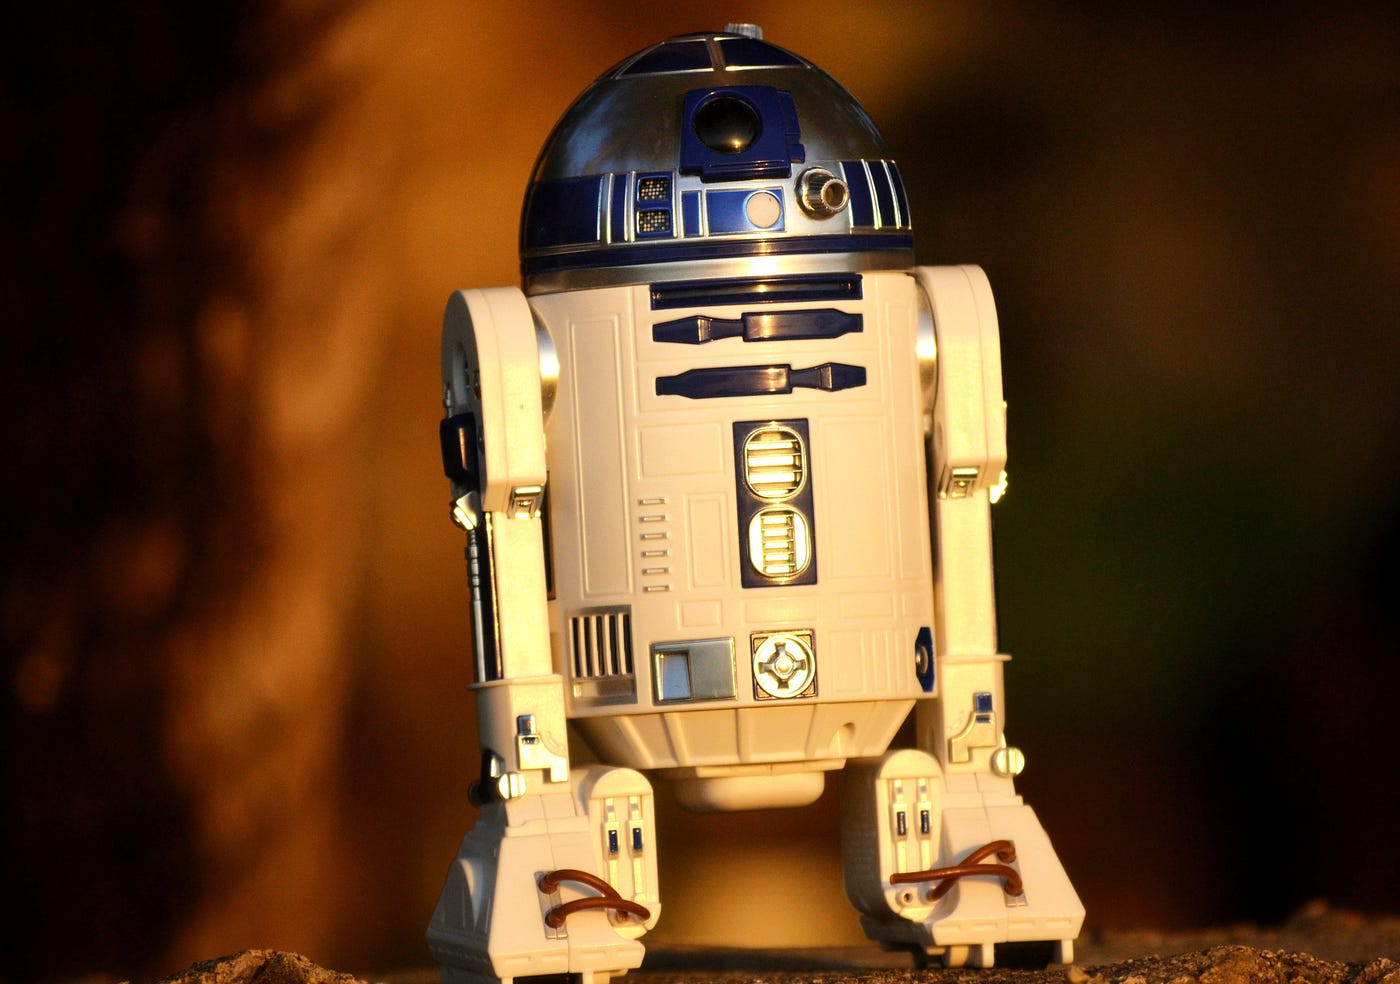 Star Wars R2-D2 5-Piece Tea Set